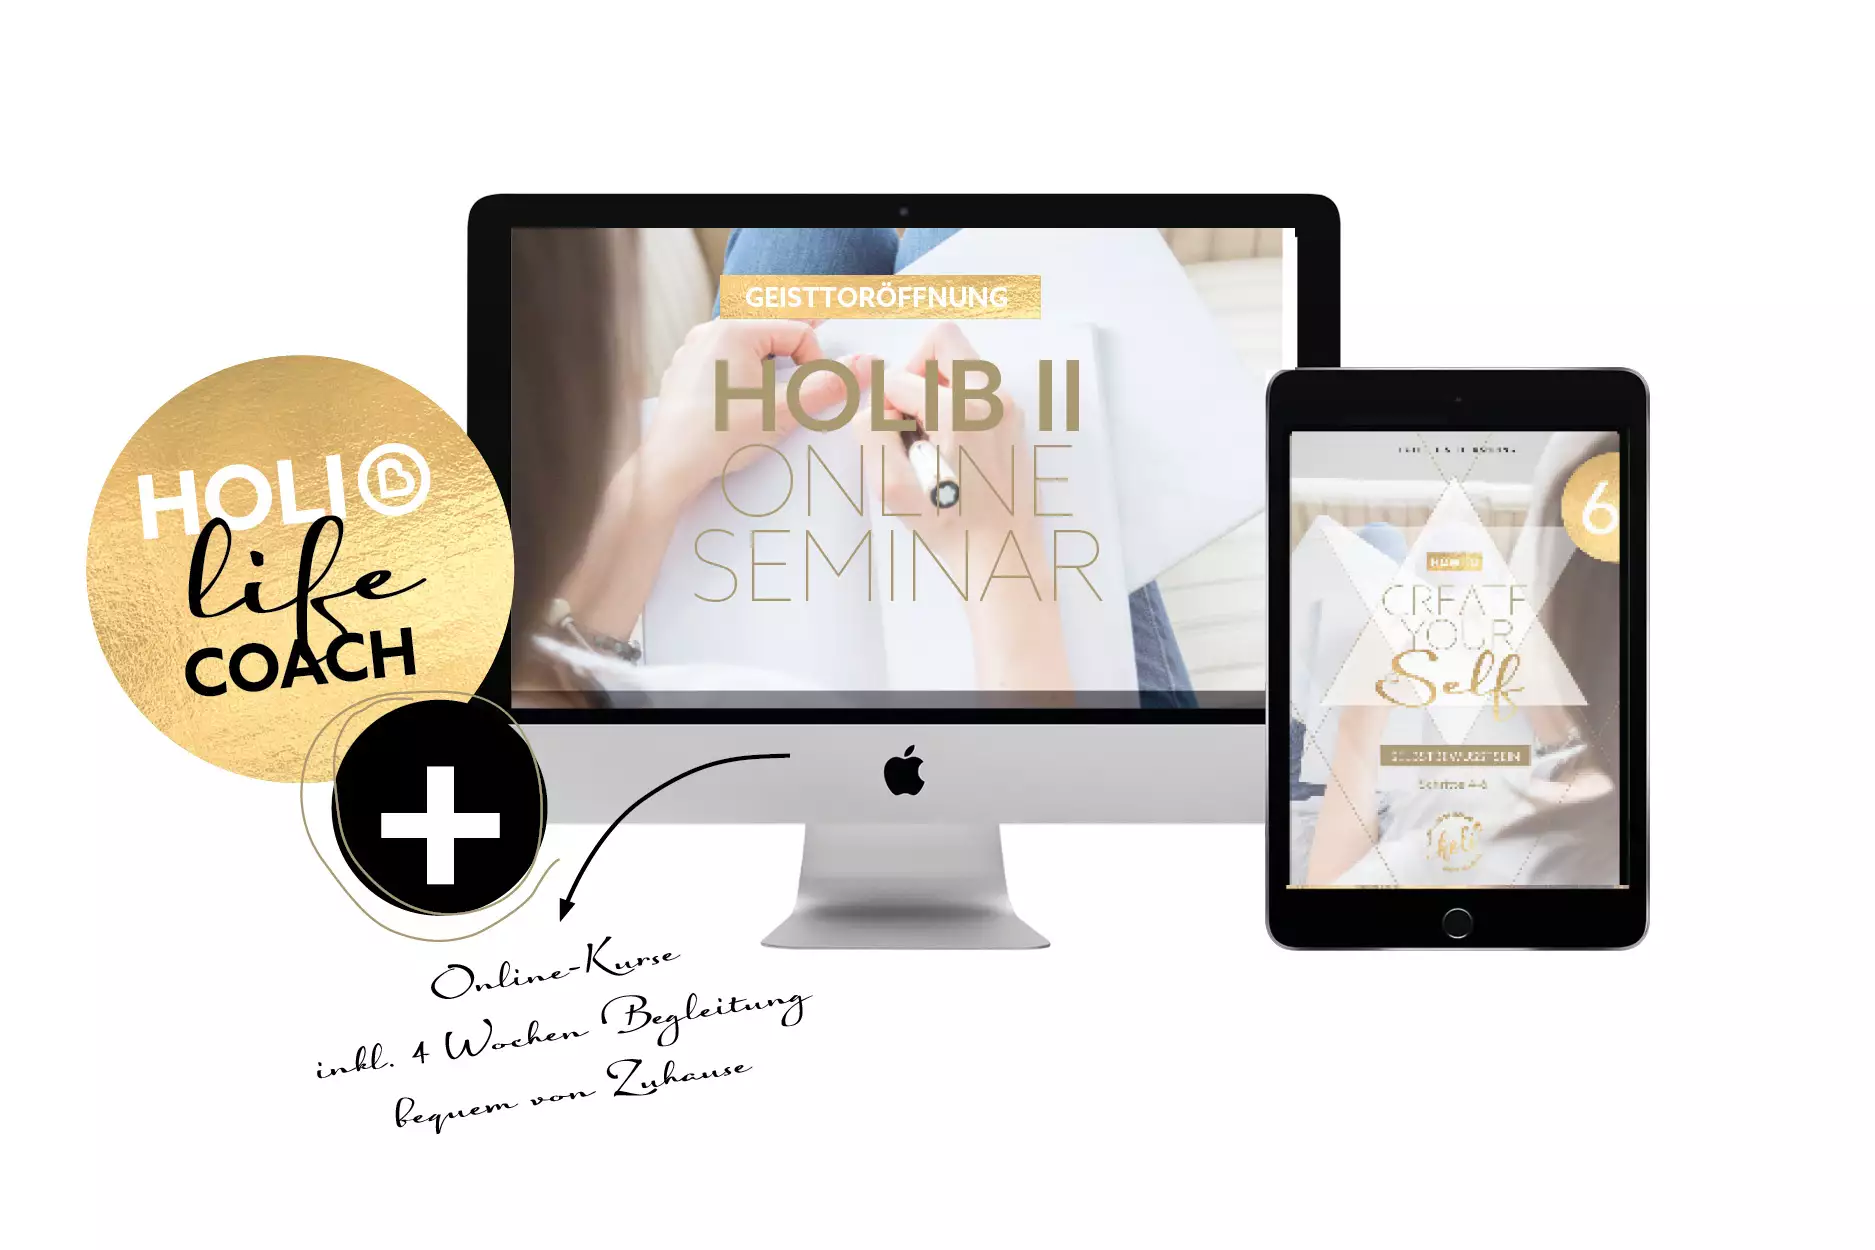 Seminar HOLI B II - Online